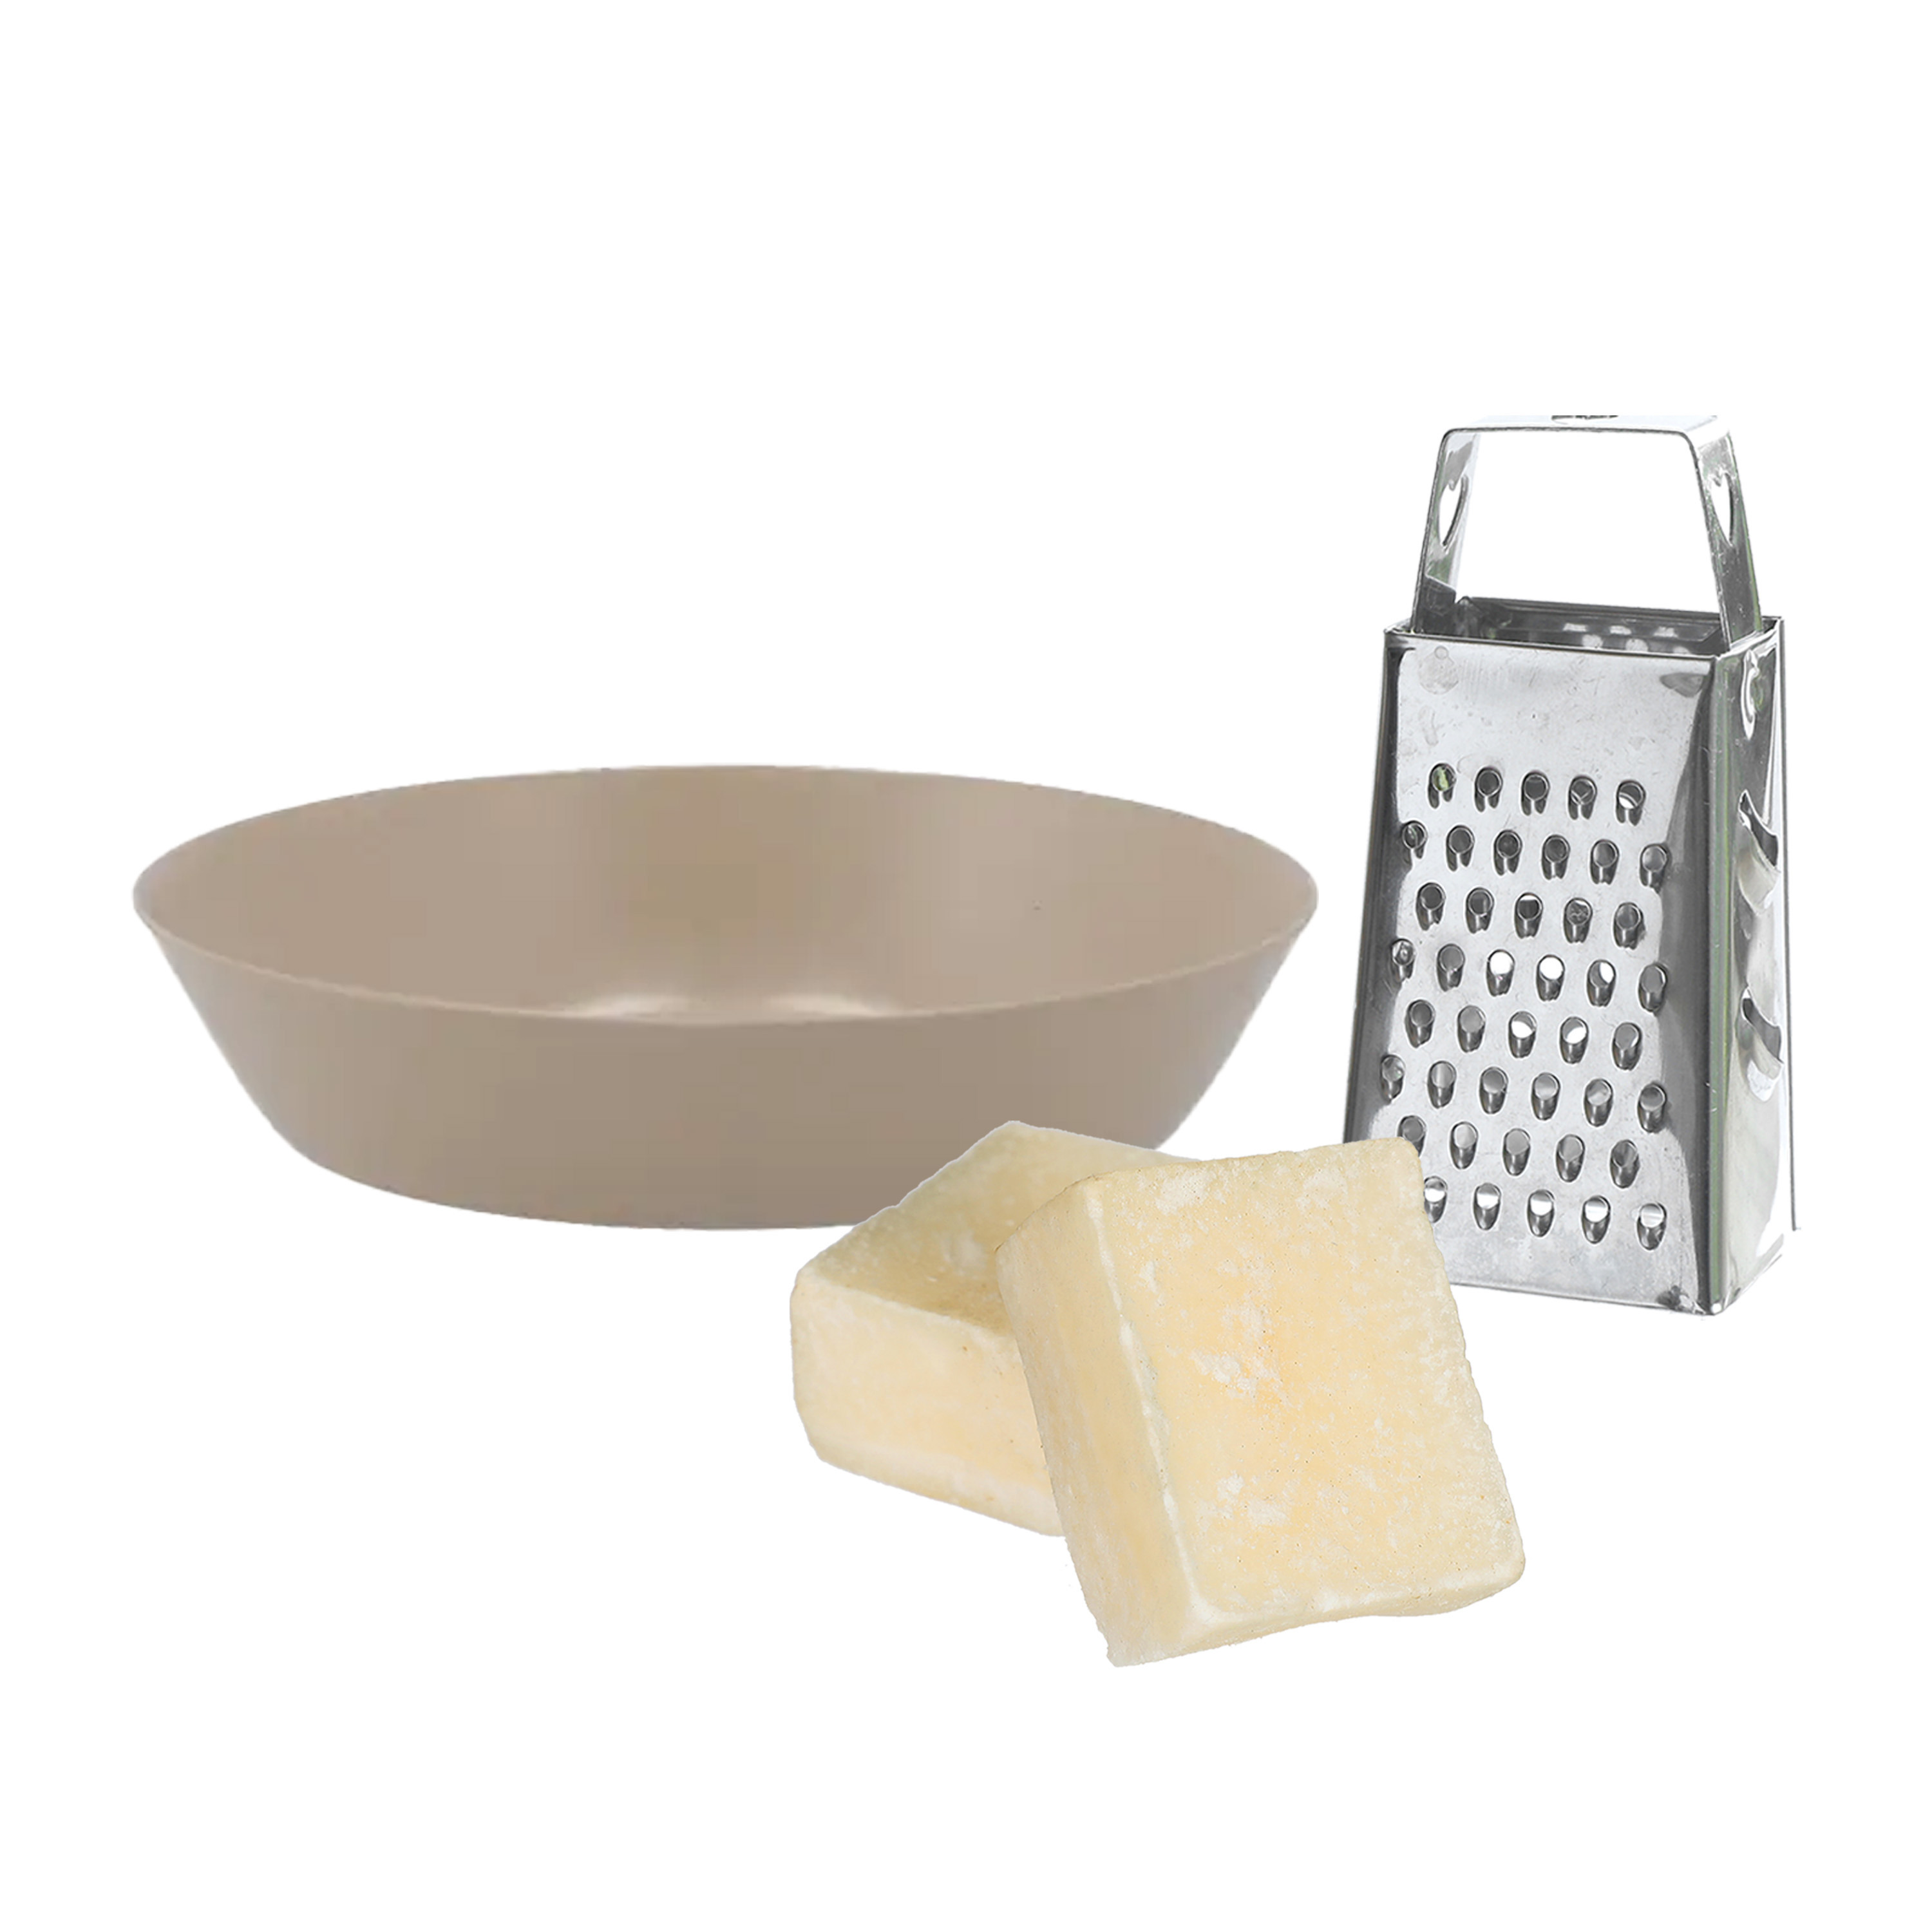 Amberblokjes-geurblokjes cadeauset cashmere geur inclusief schaaltje en mini rasp